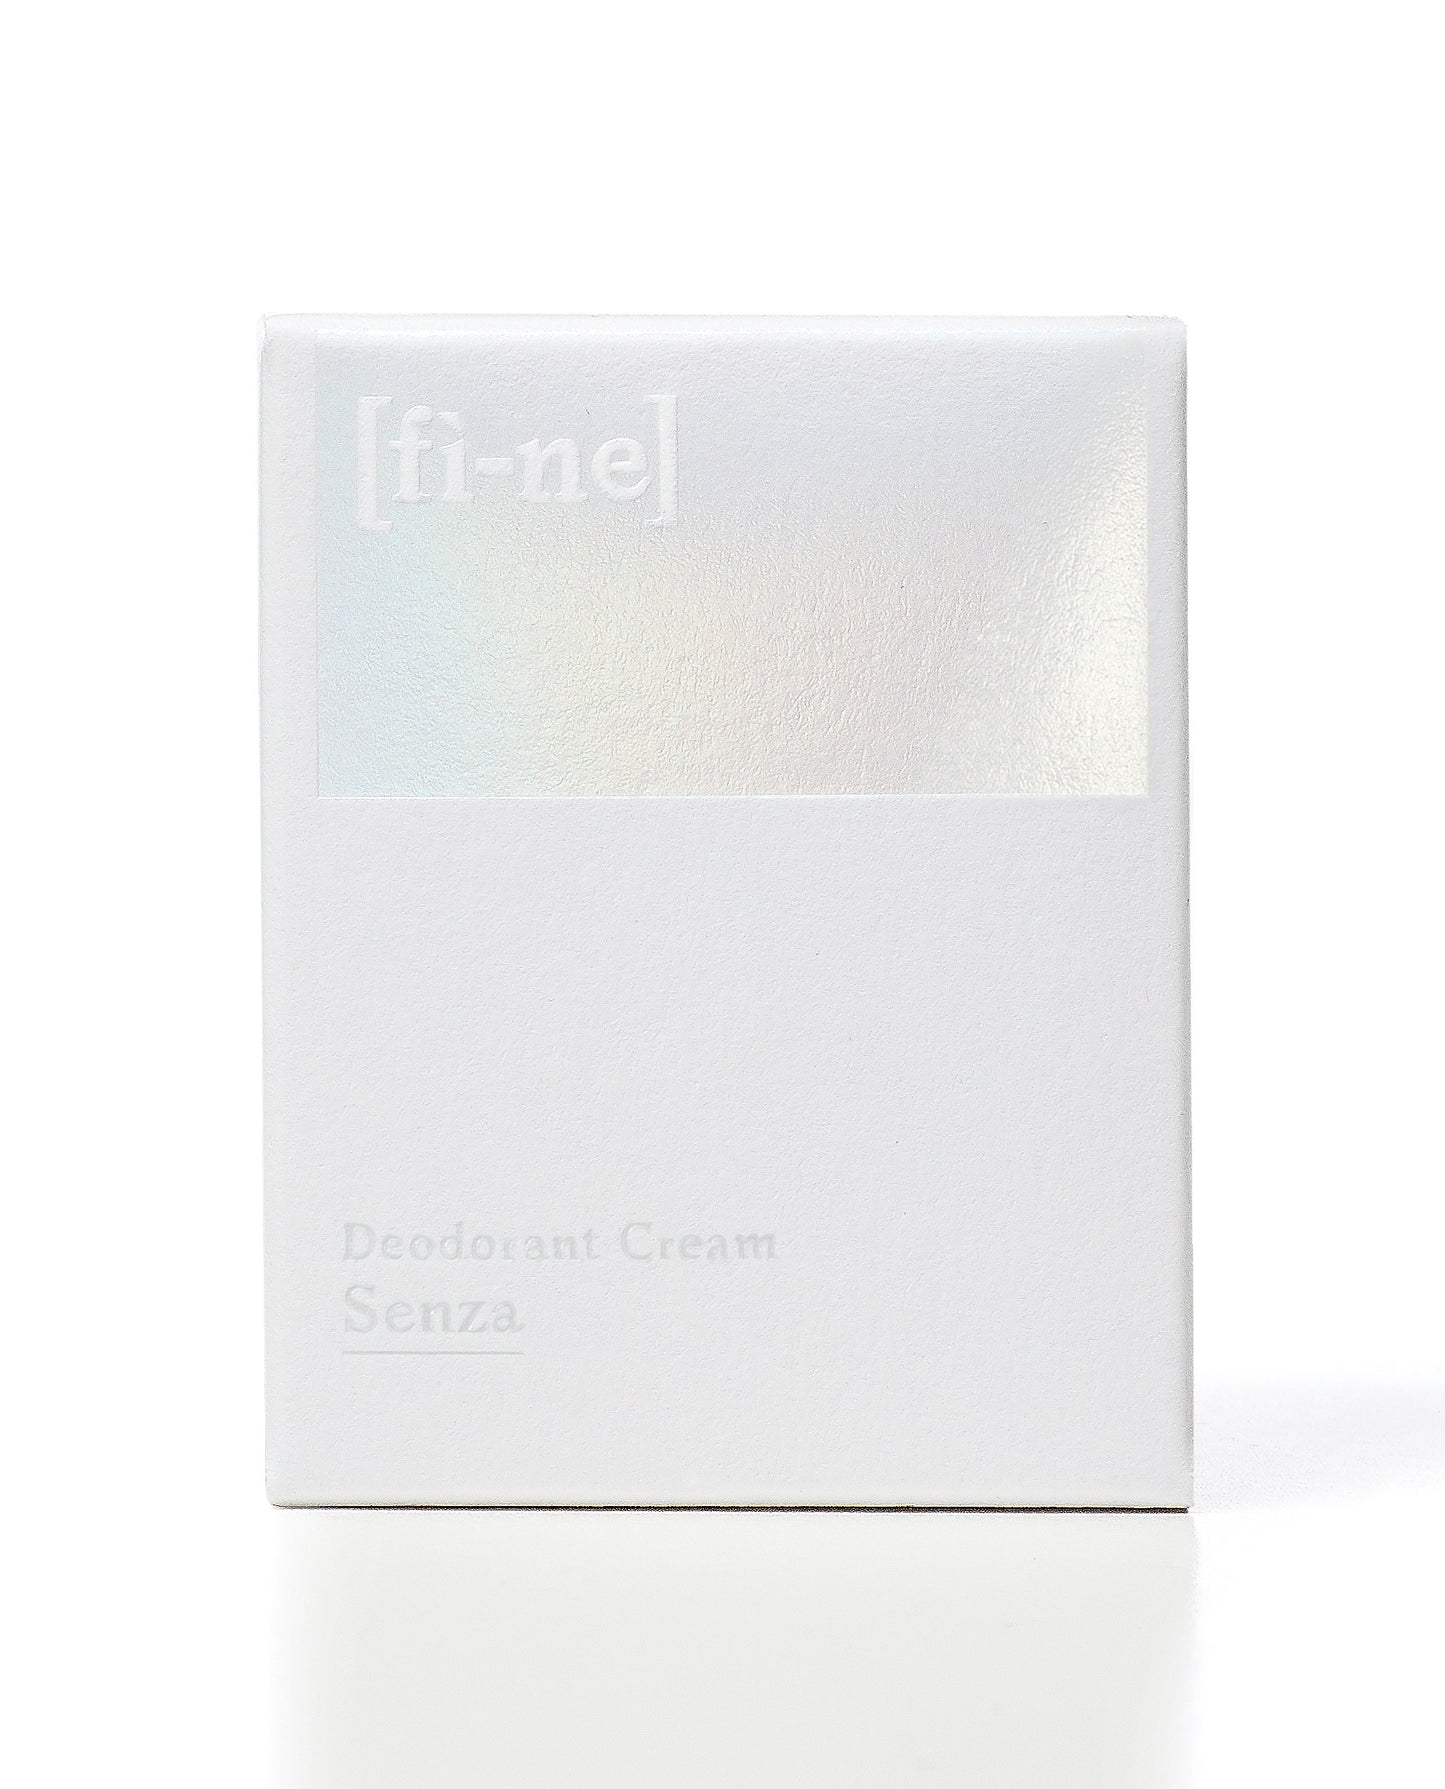 FINE - Deodorant 30 g Senza